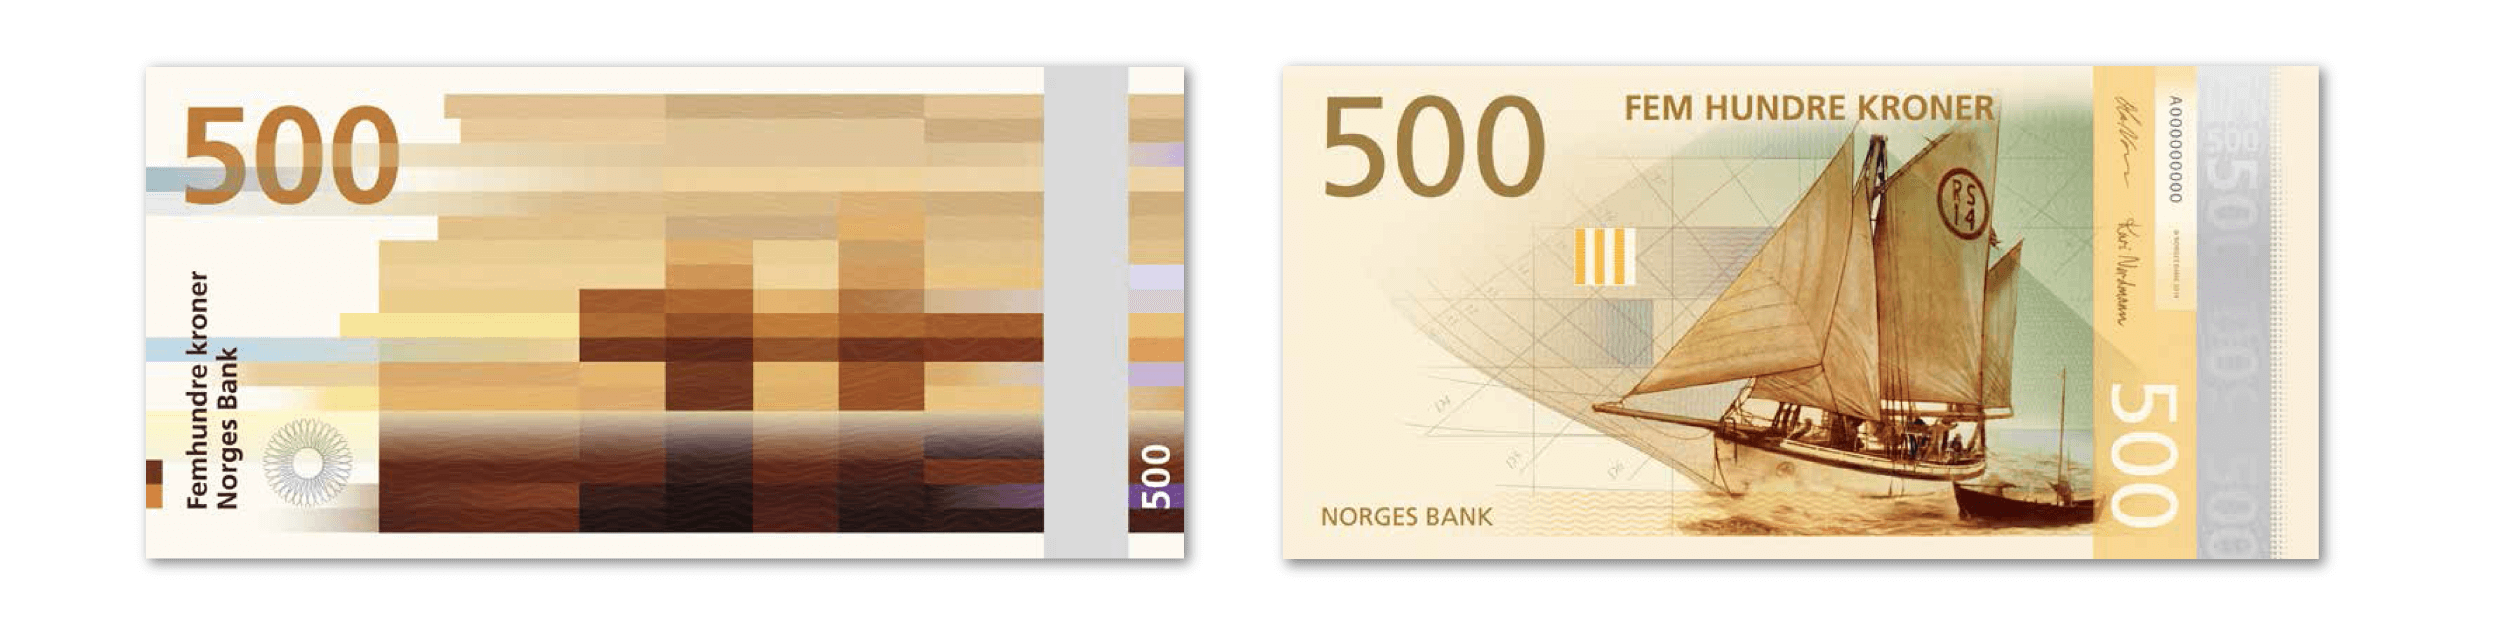 Norway Currency Redesign_500-kroner